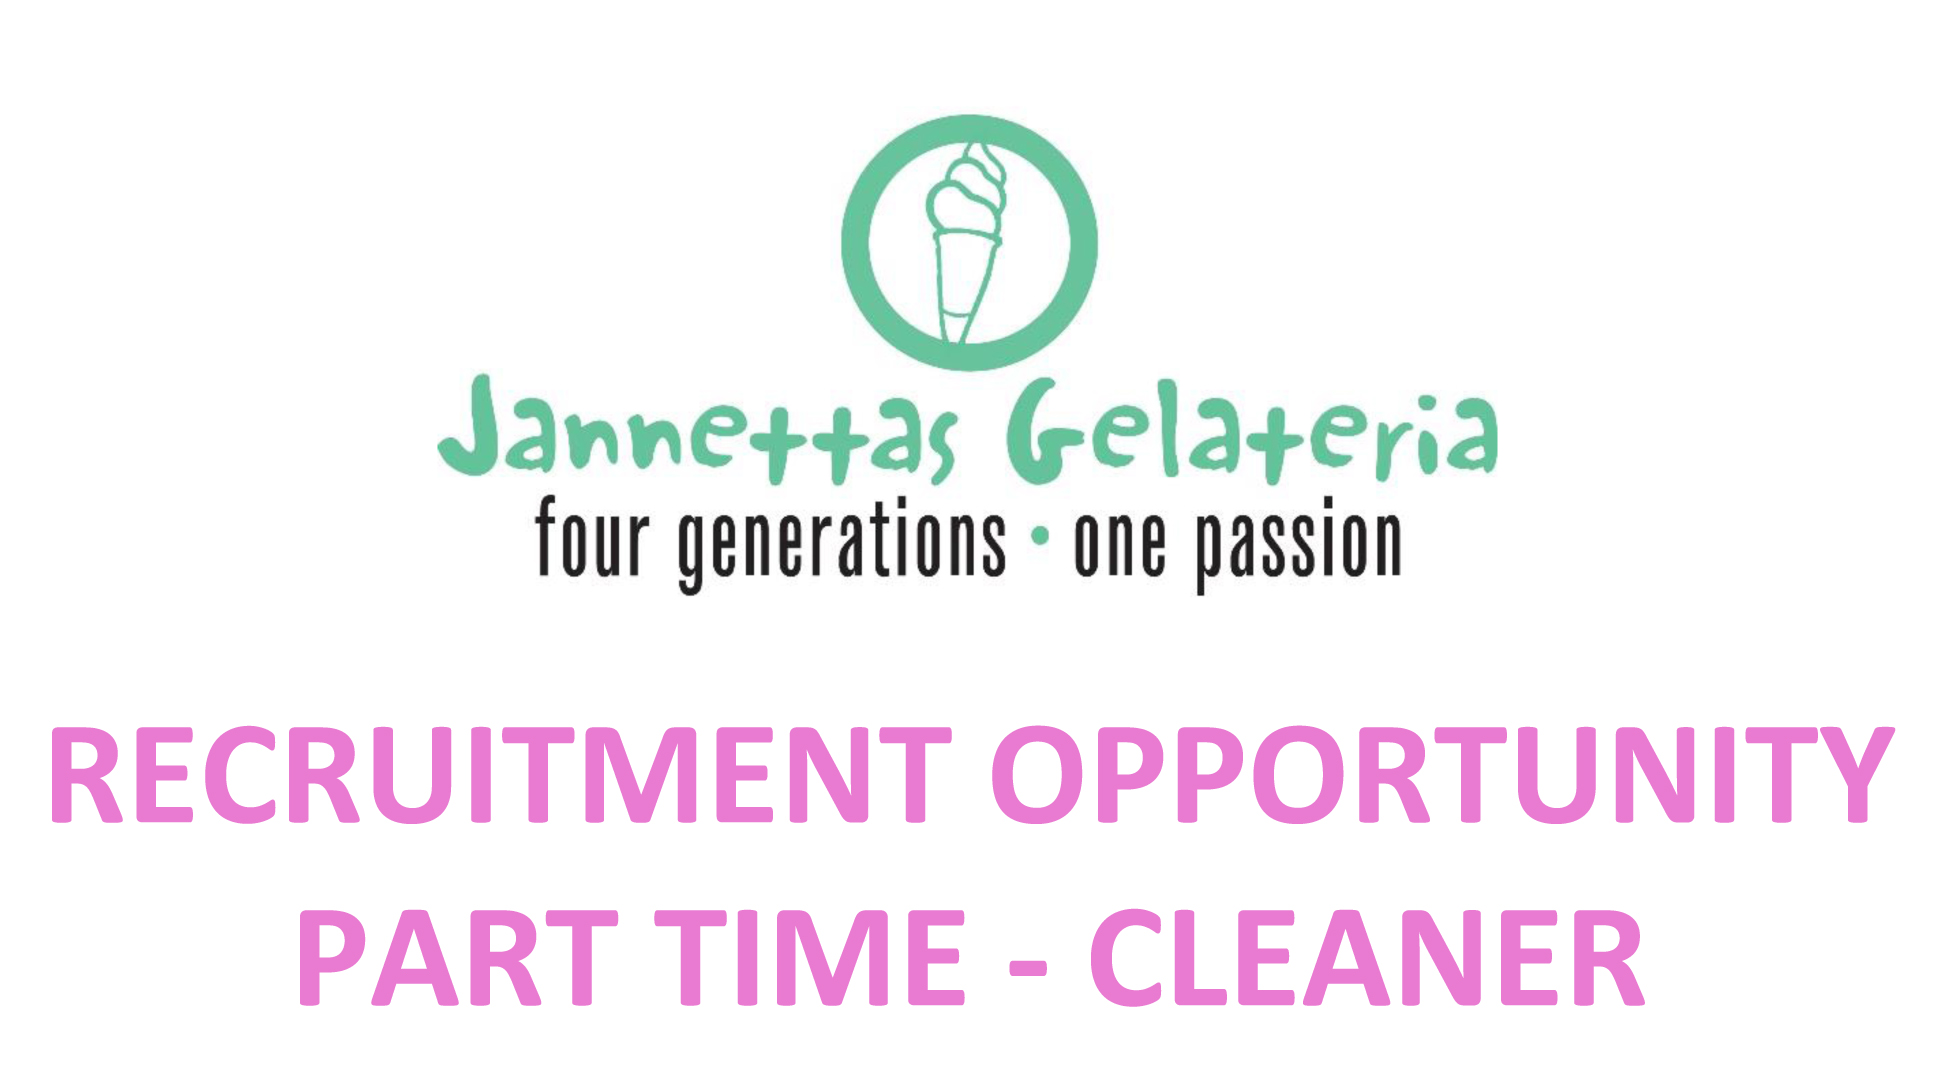 18 Feb16 - Job Advert - Cleaner